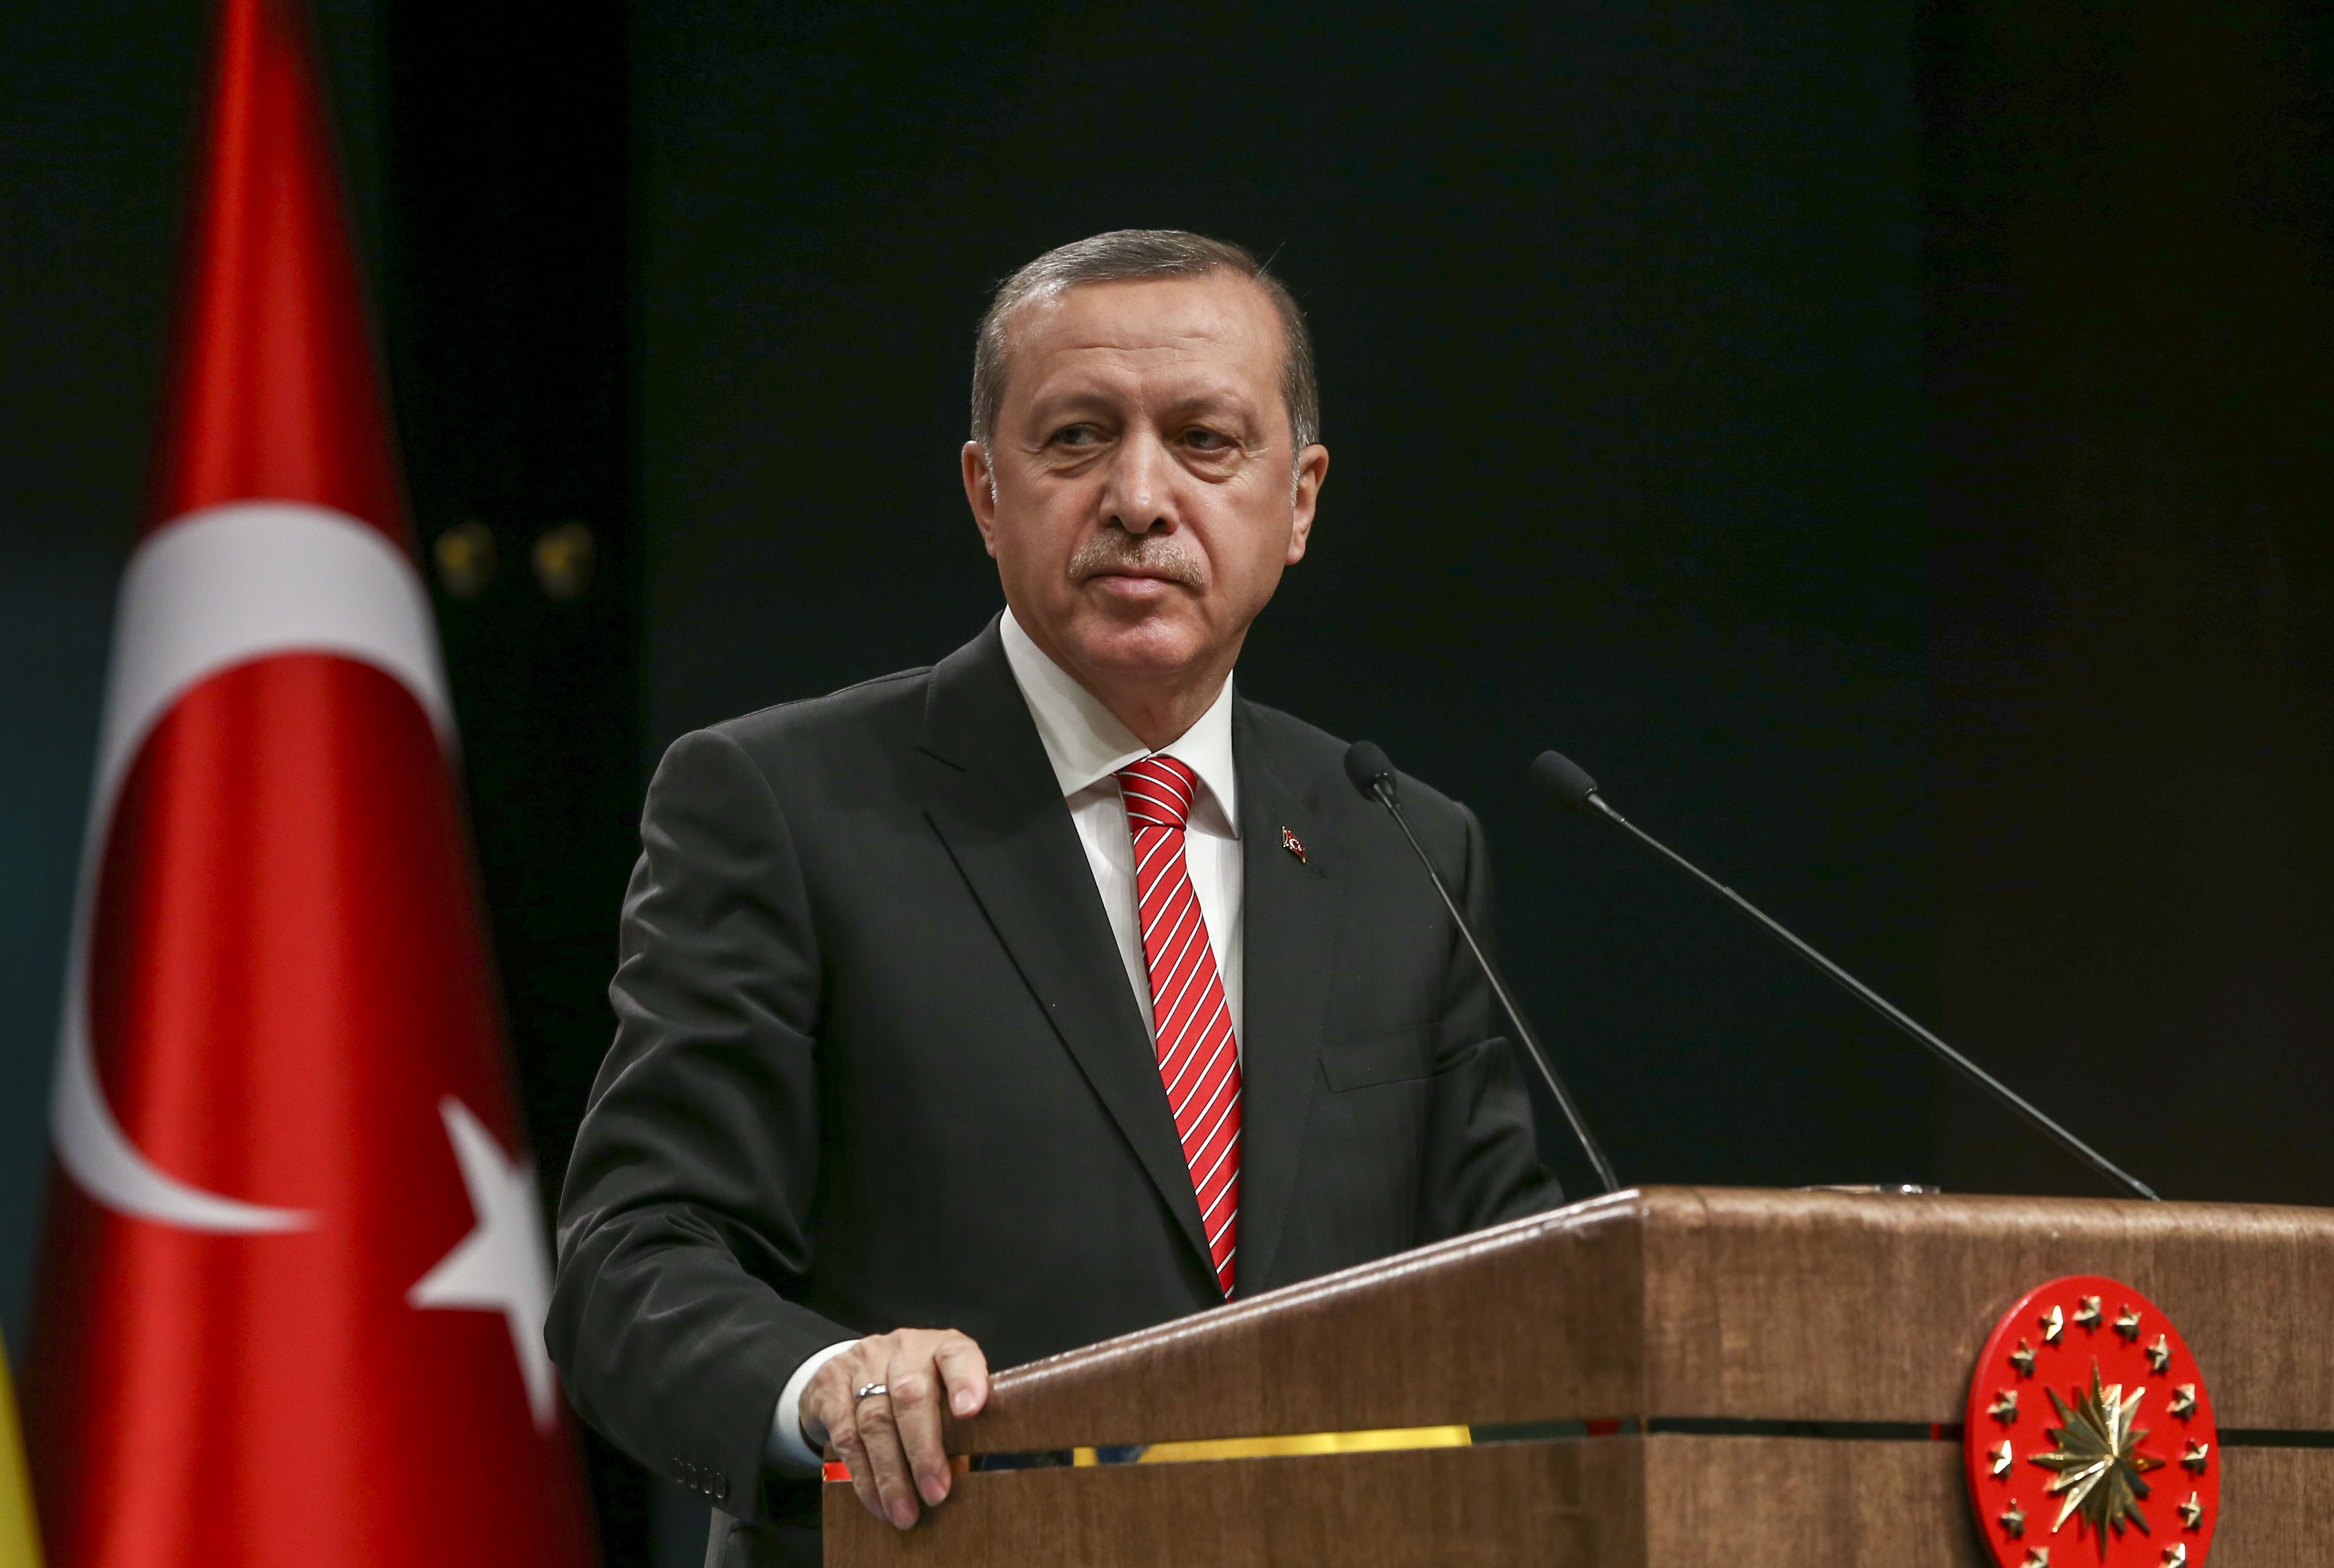 President of Turkey Recep Tayyip Erdogan at a press conference after the 5th Turkey-Ukraine High Level Strategic Council Meeting in Ankara, Turkey on March 9, 2016. (Ahmet Izgi—Anadolu Agency/Getty Images)